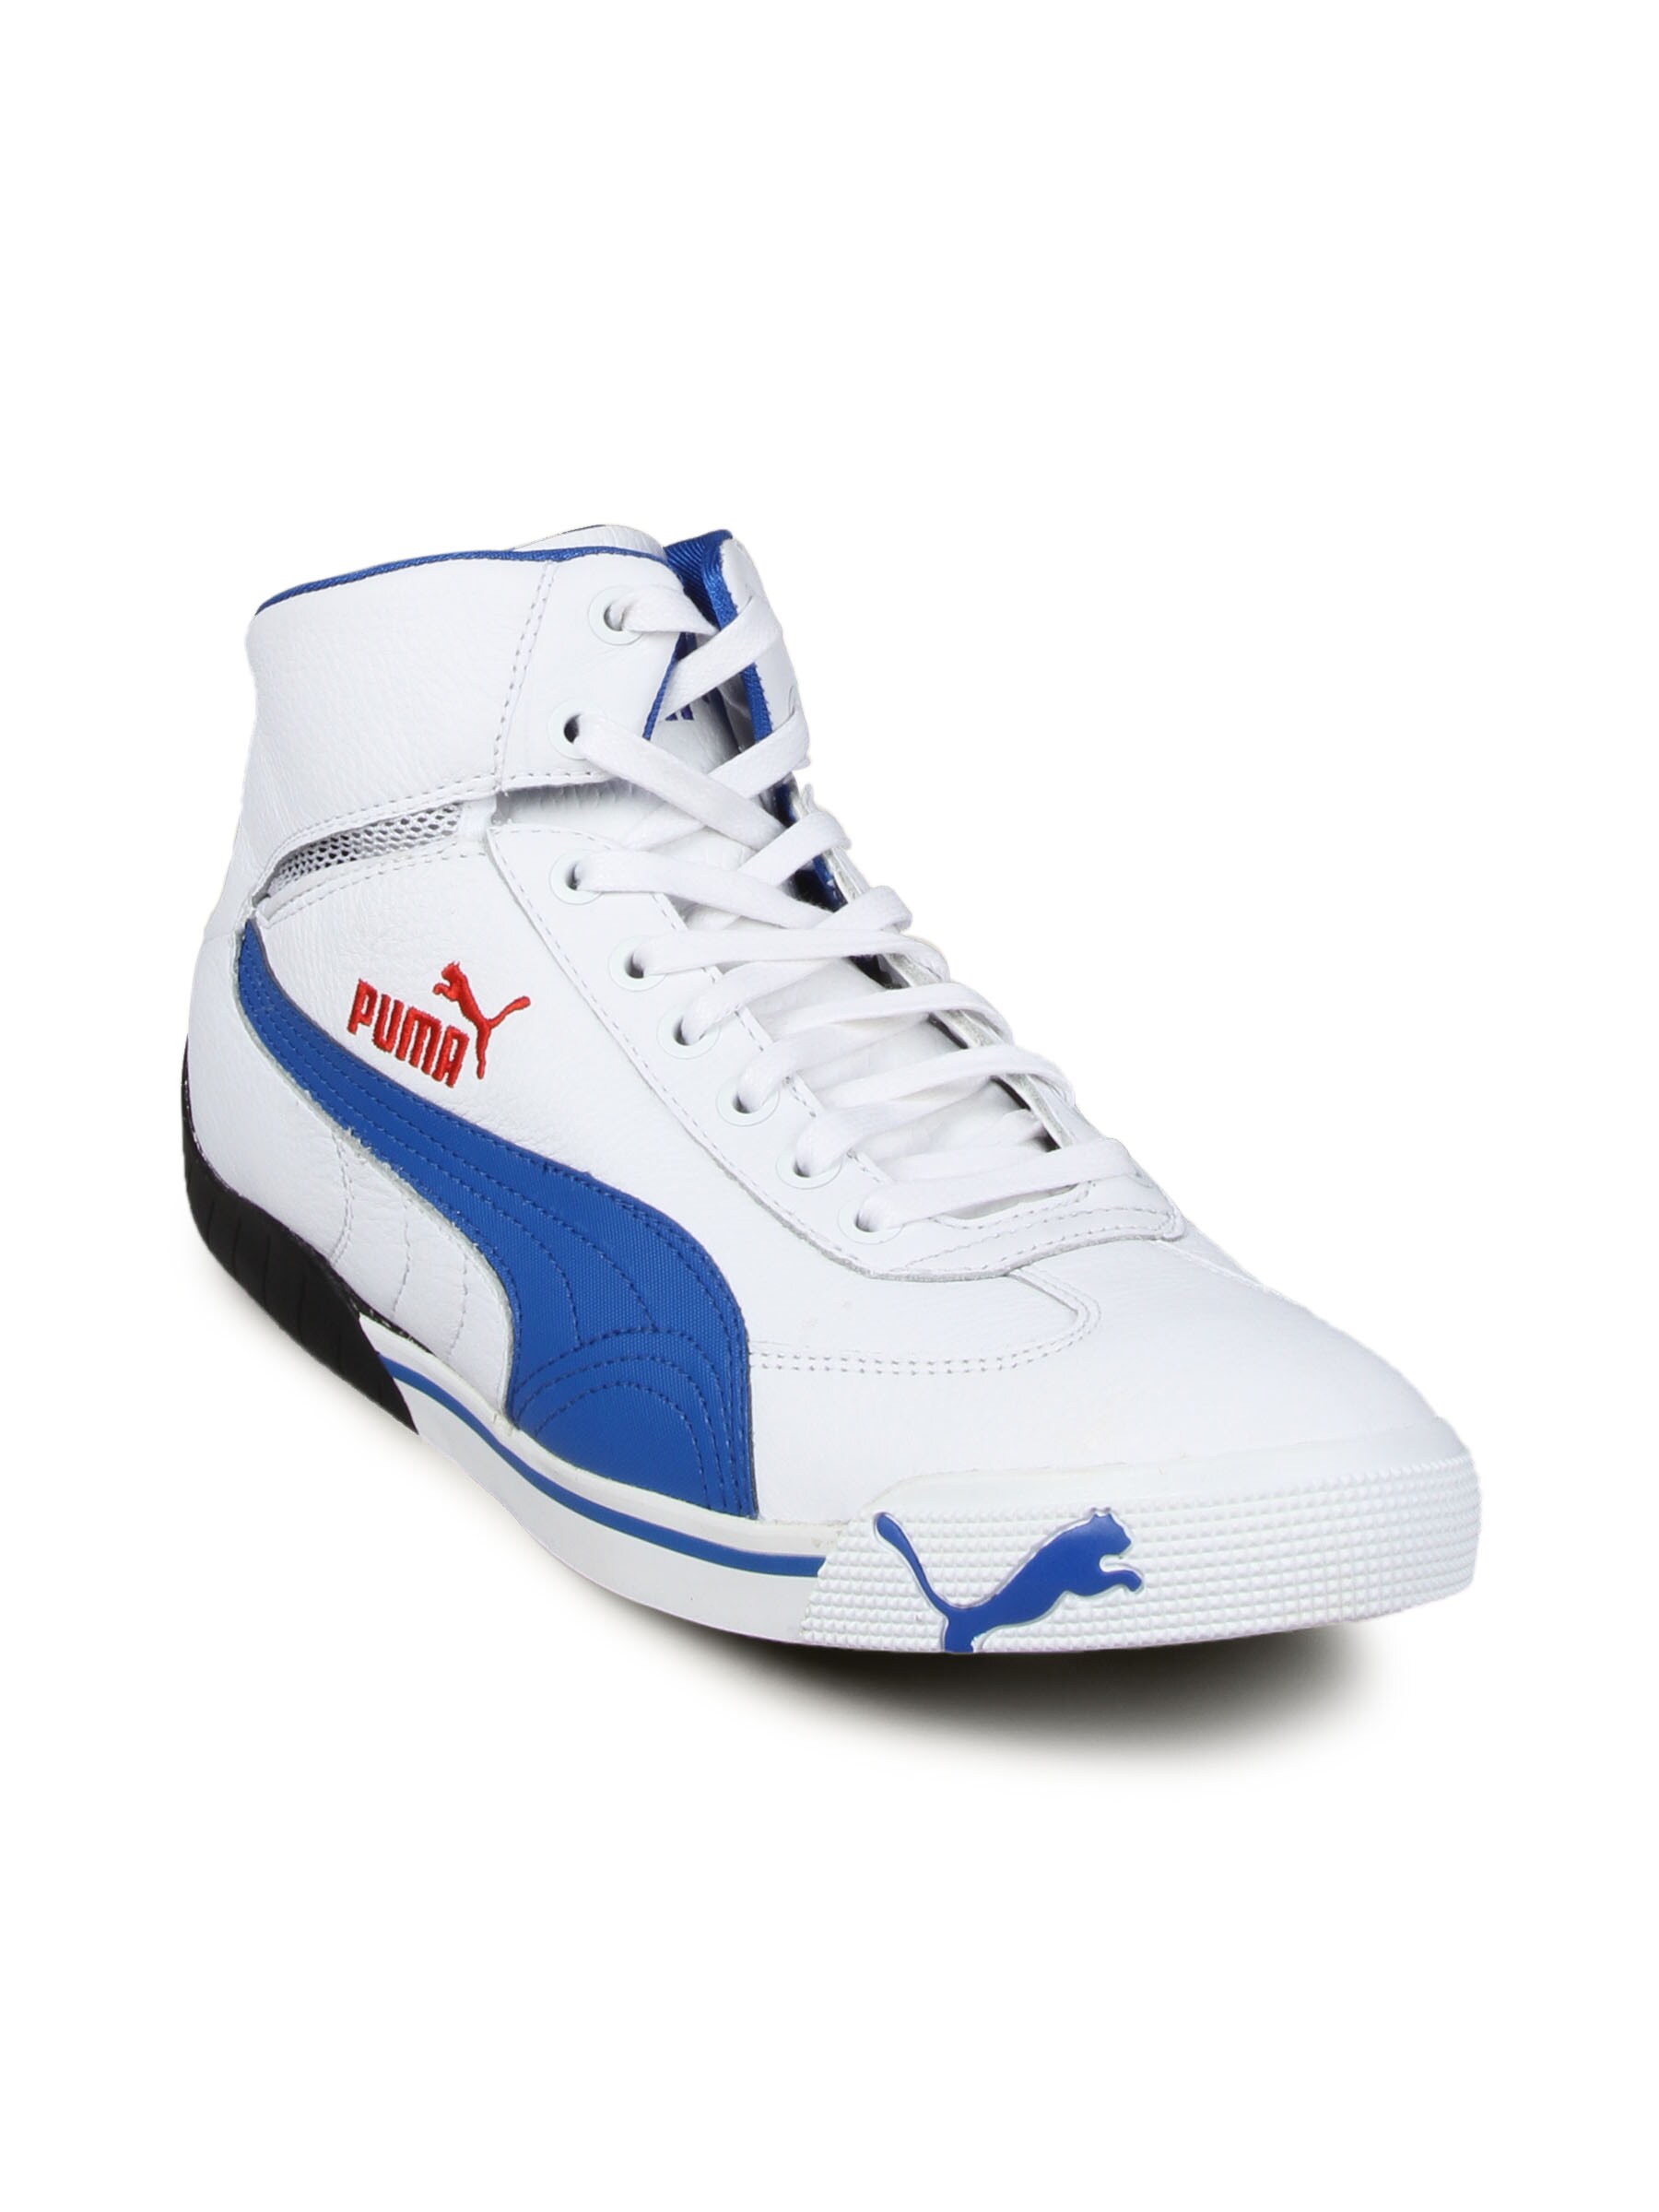 Puma Men's Speed Cat White Blue Shoe